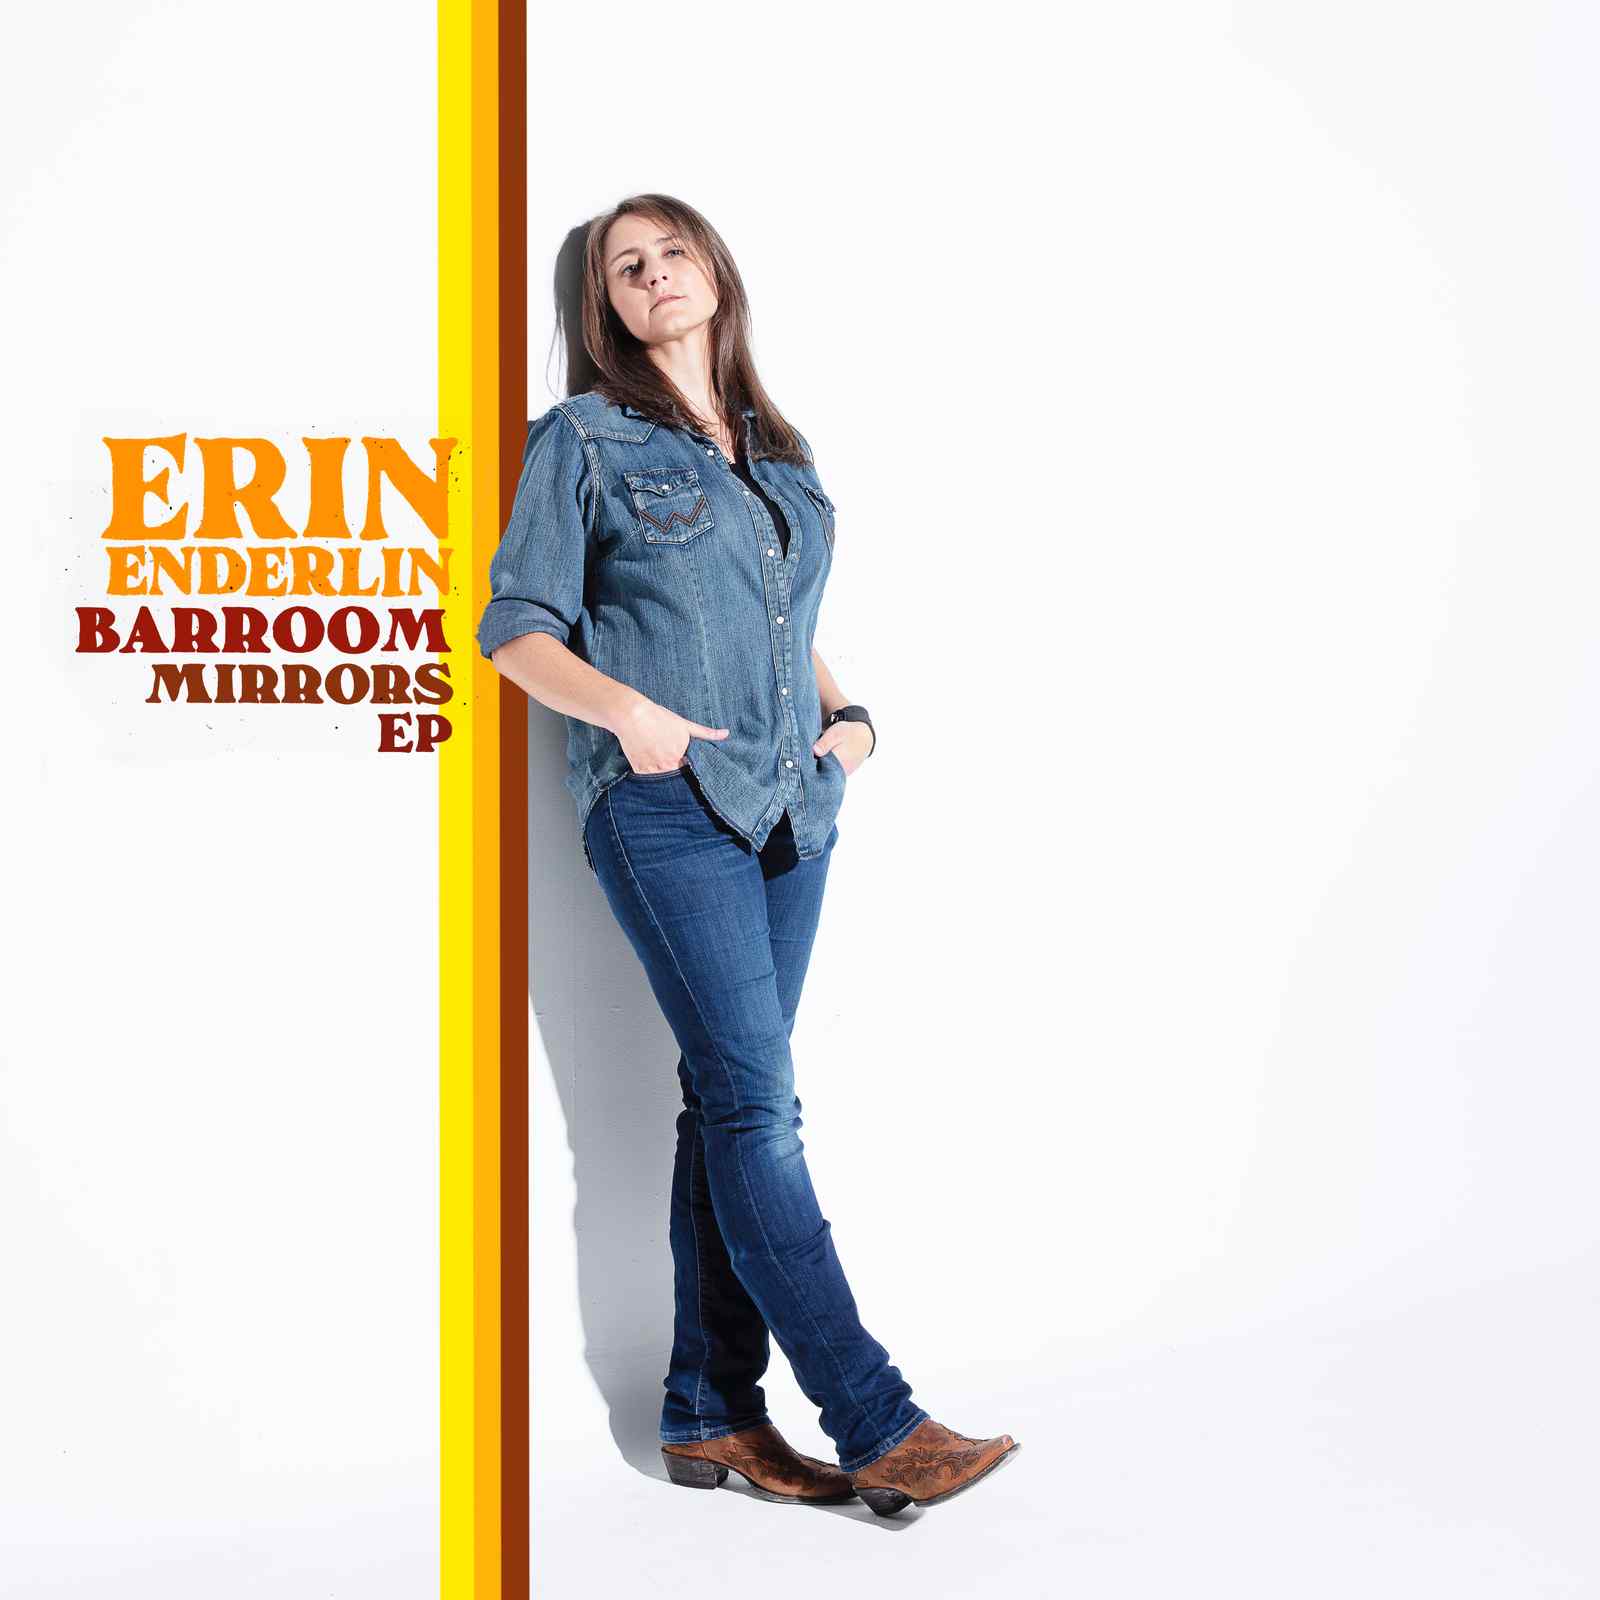 Barroom Mirrors EP by Erin Enderlin